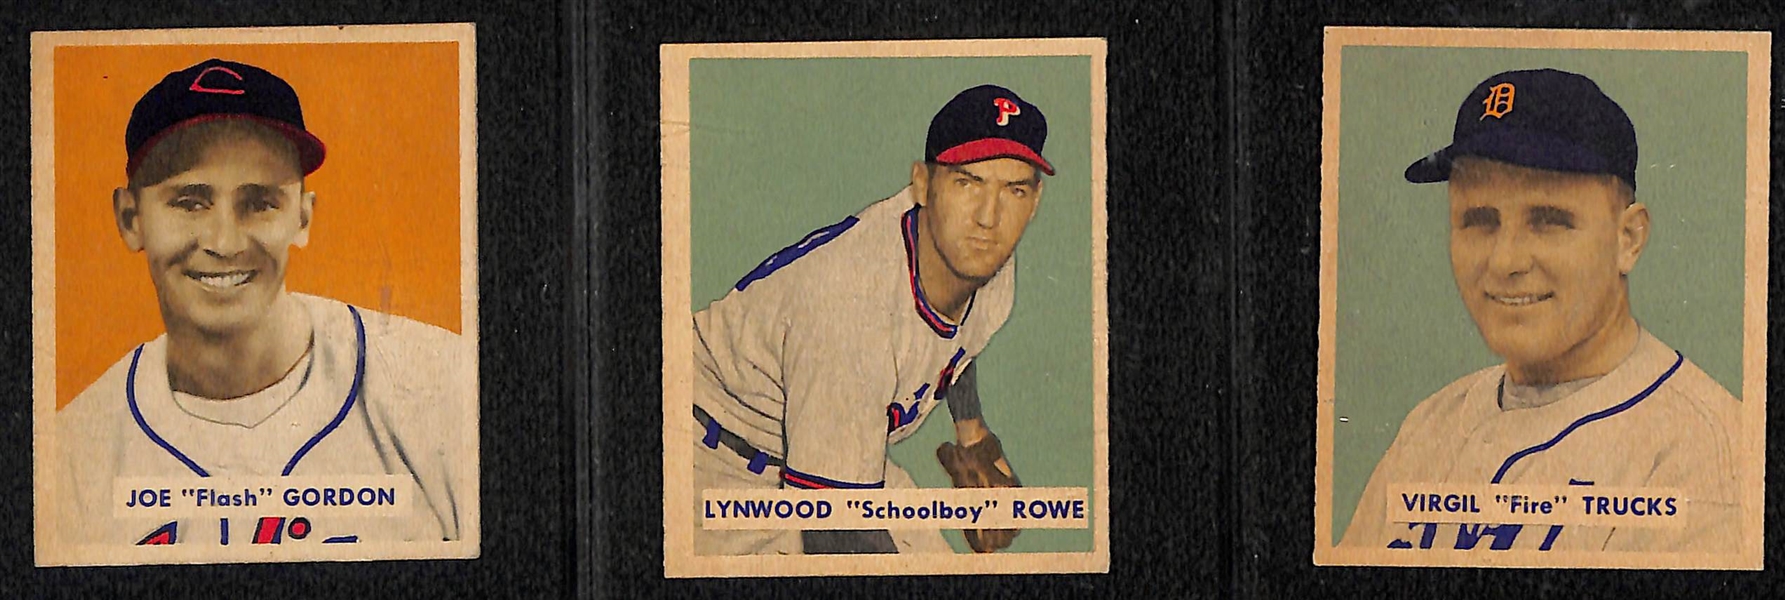 Lot of (21) 1949 Bowman Baseball Cards (Many High-Quality) w. Robin Roberts Rookie, Bob Feller, Lou Boudreau, Early Wynn, Luke Appling, +